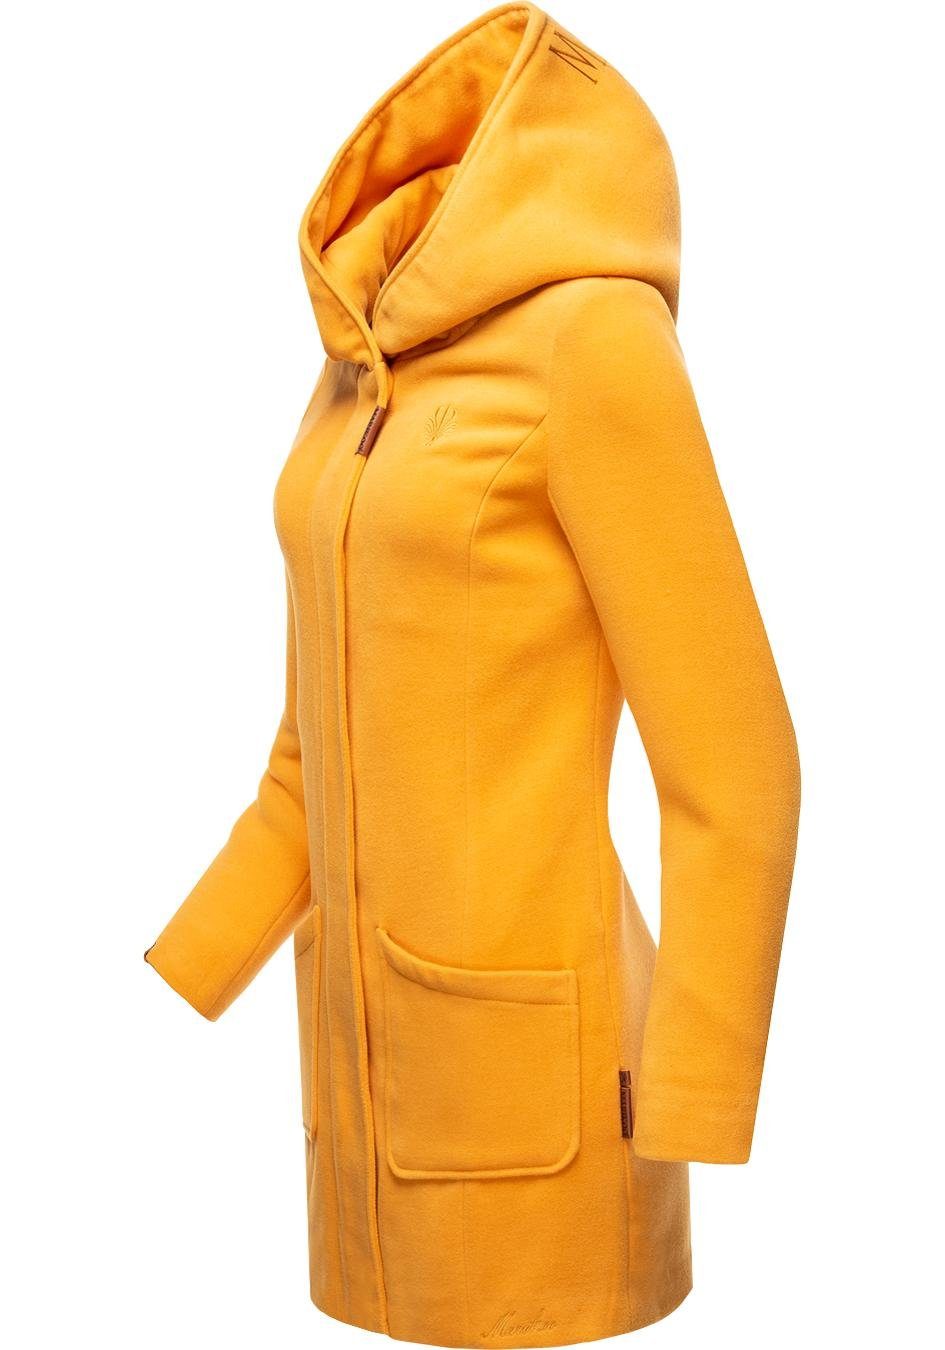 mit großer Maikoo Wintermantel Mantel gelb hochwertiger Marikoo Kapuze